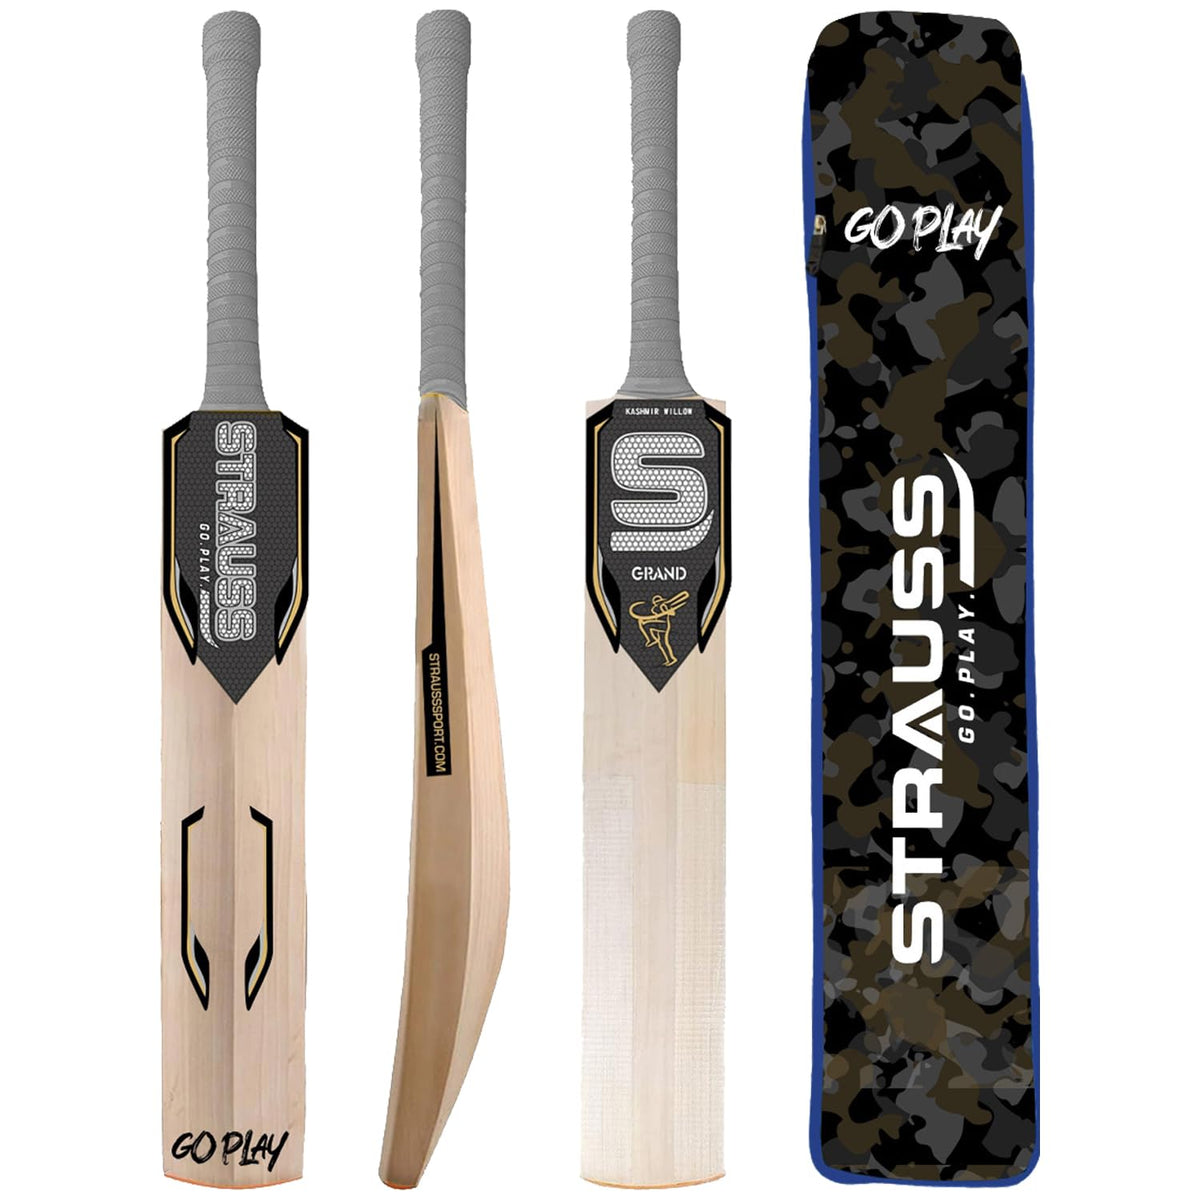 Strauss Grand Cricket Bat | Kashmir Willow | Cricket Bat with Grip for Tournament Match | Standard Leather Ball Bat for Cricket | Size: Short Handle (1150-1250 Grams)